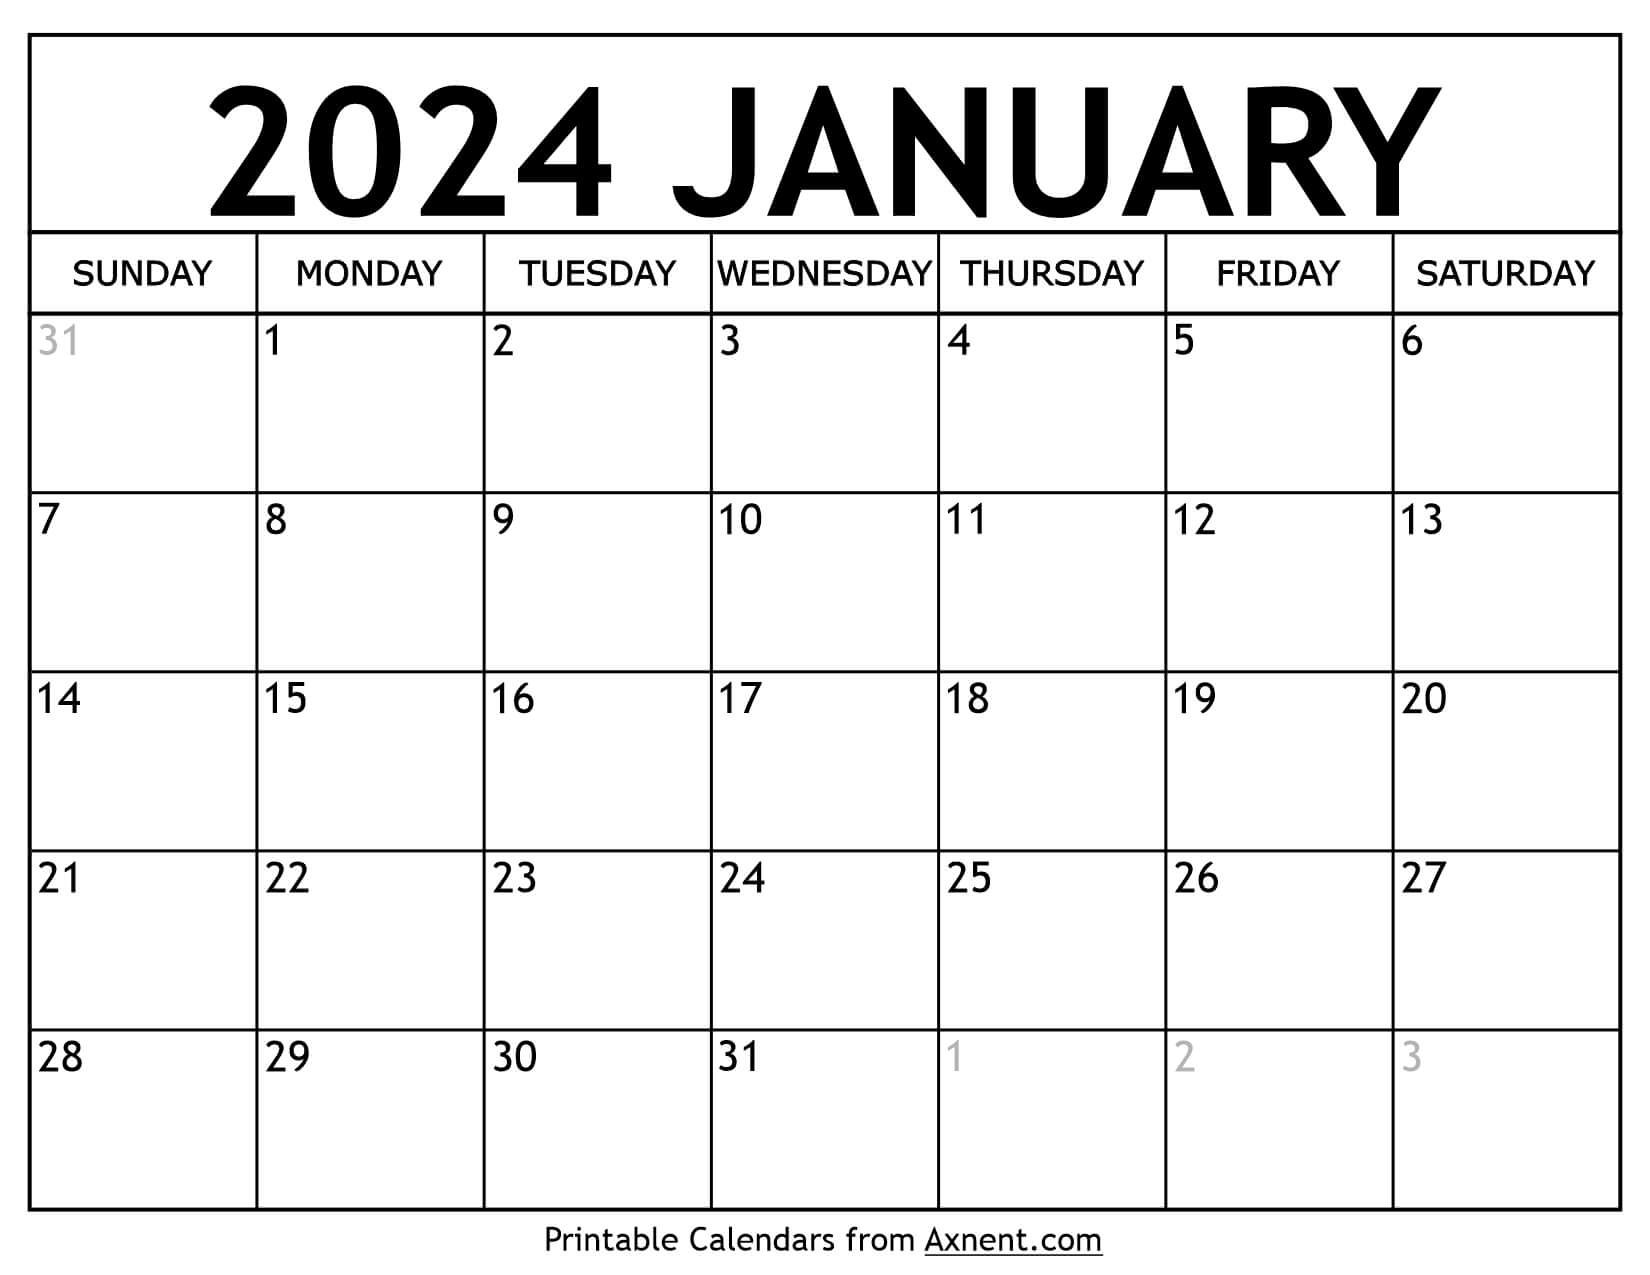 Printable January 2024 Calendar Template - Print Now for Blank Calendar Printable January 2024